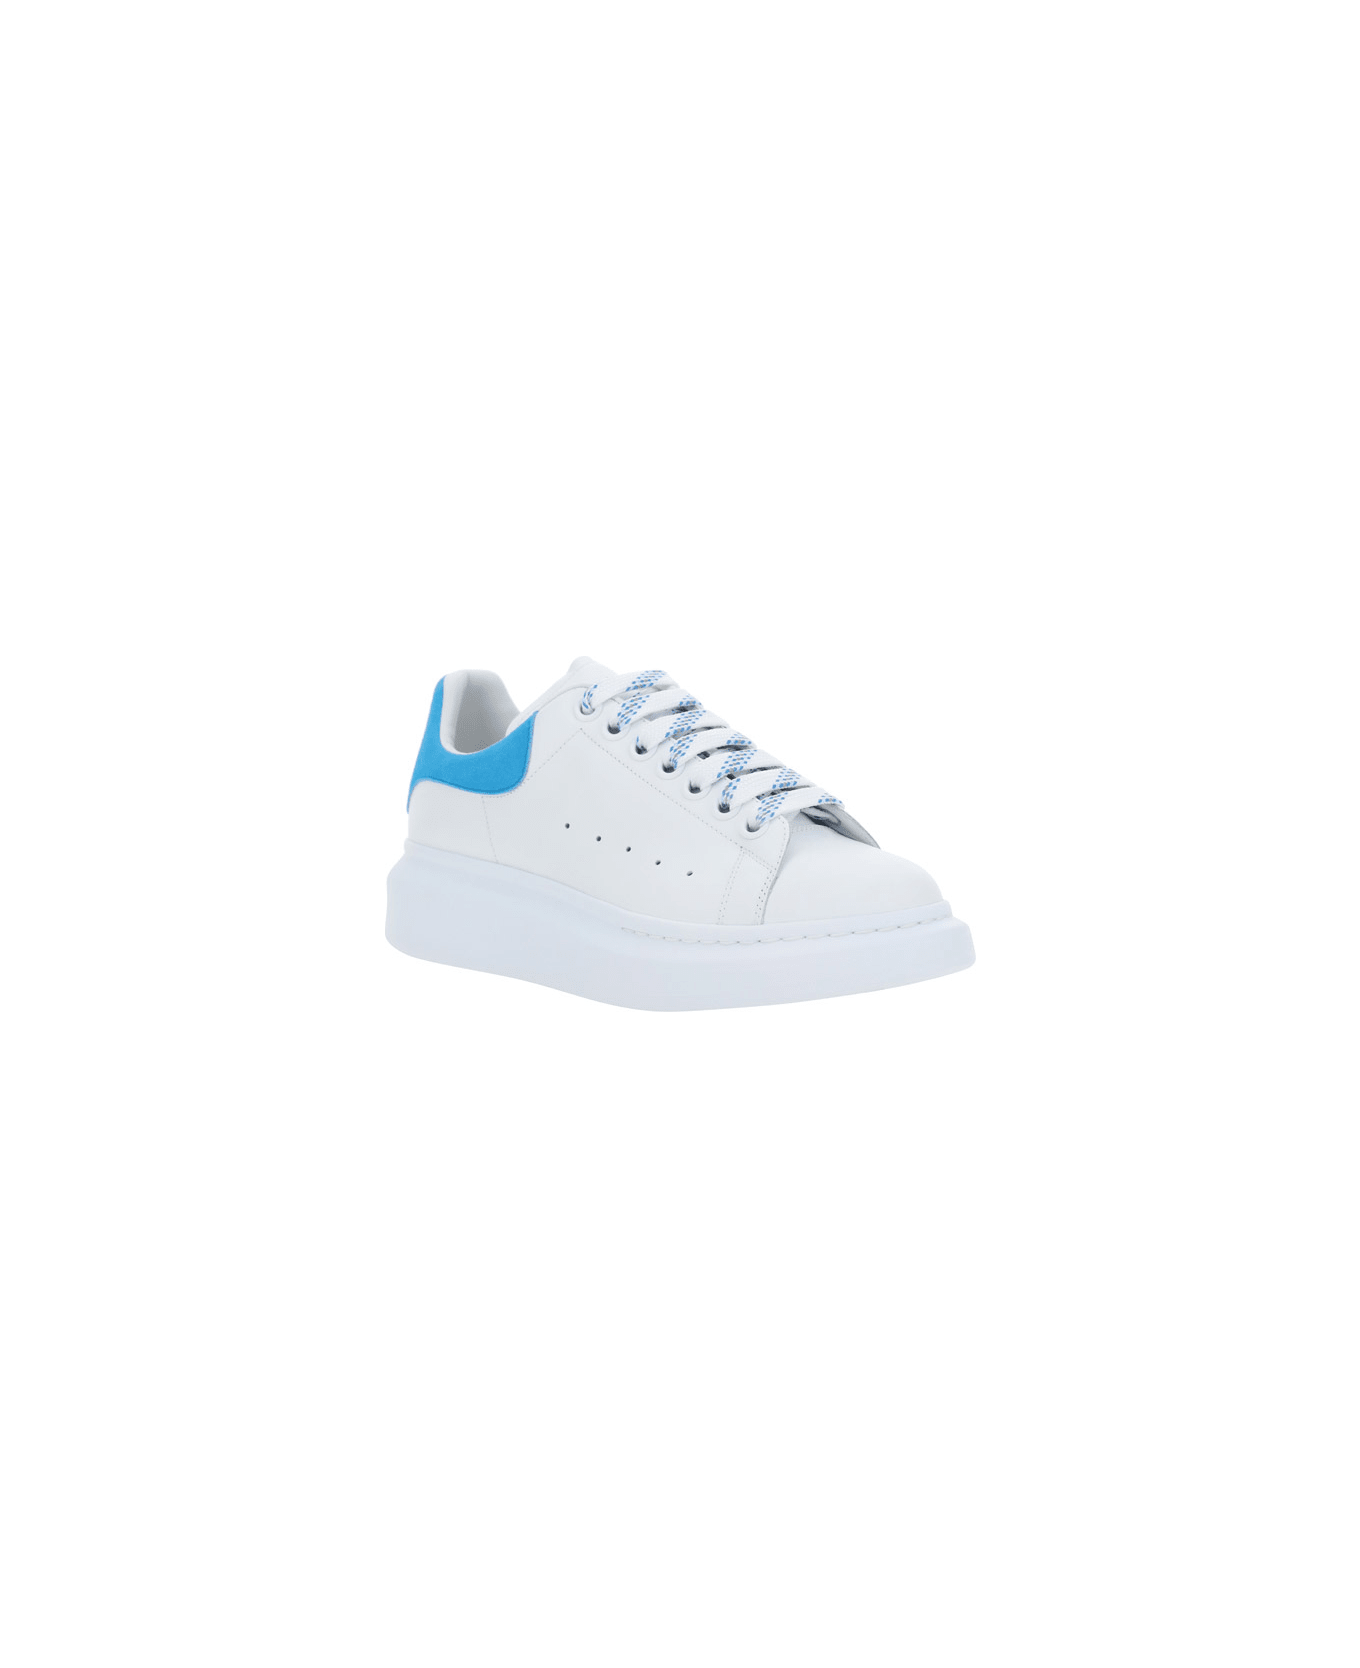 Alexander McQueen Sneakers - White/new cerul.blue